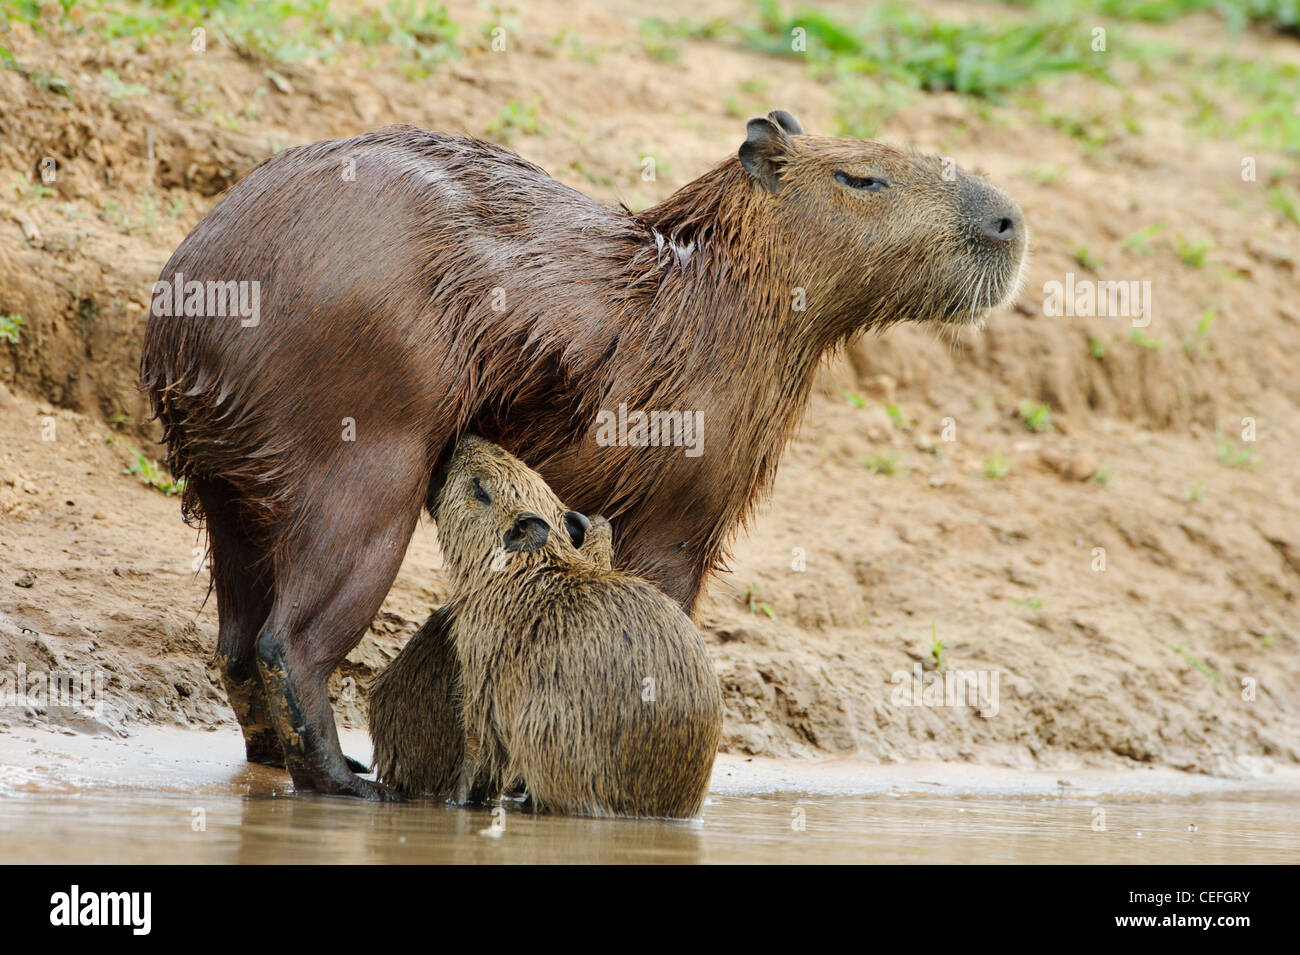 https://c8.alamy.com/comp/CEFGRY/a-baby-capybara-feeding-CEFGRY.jpg